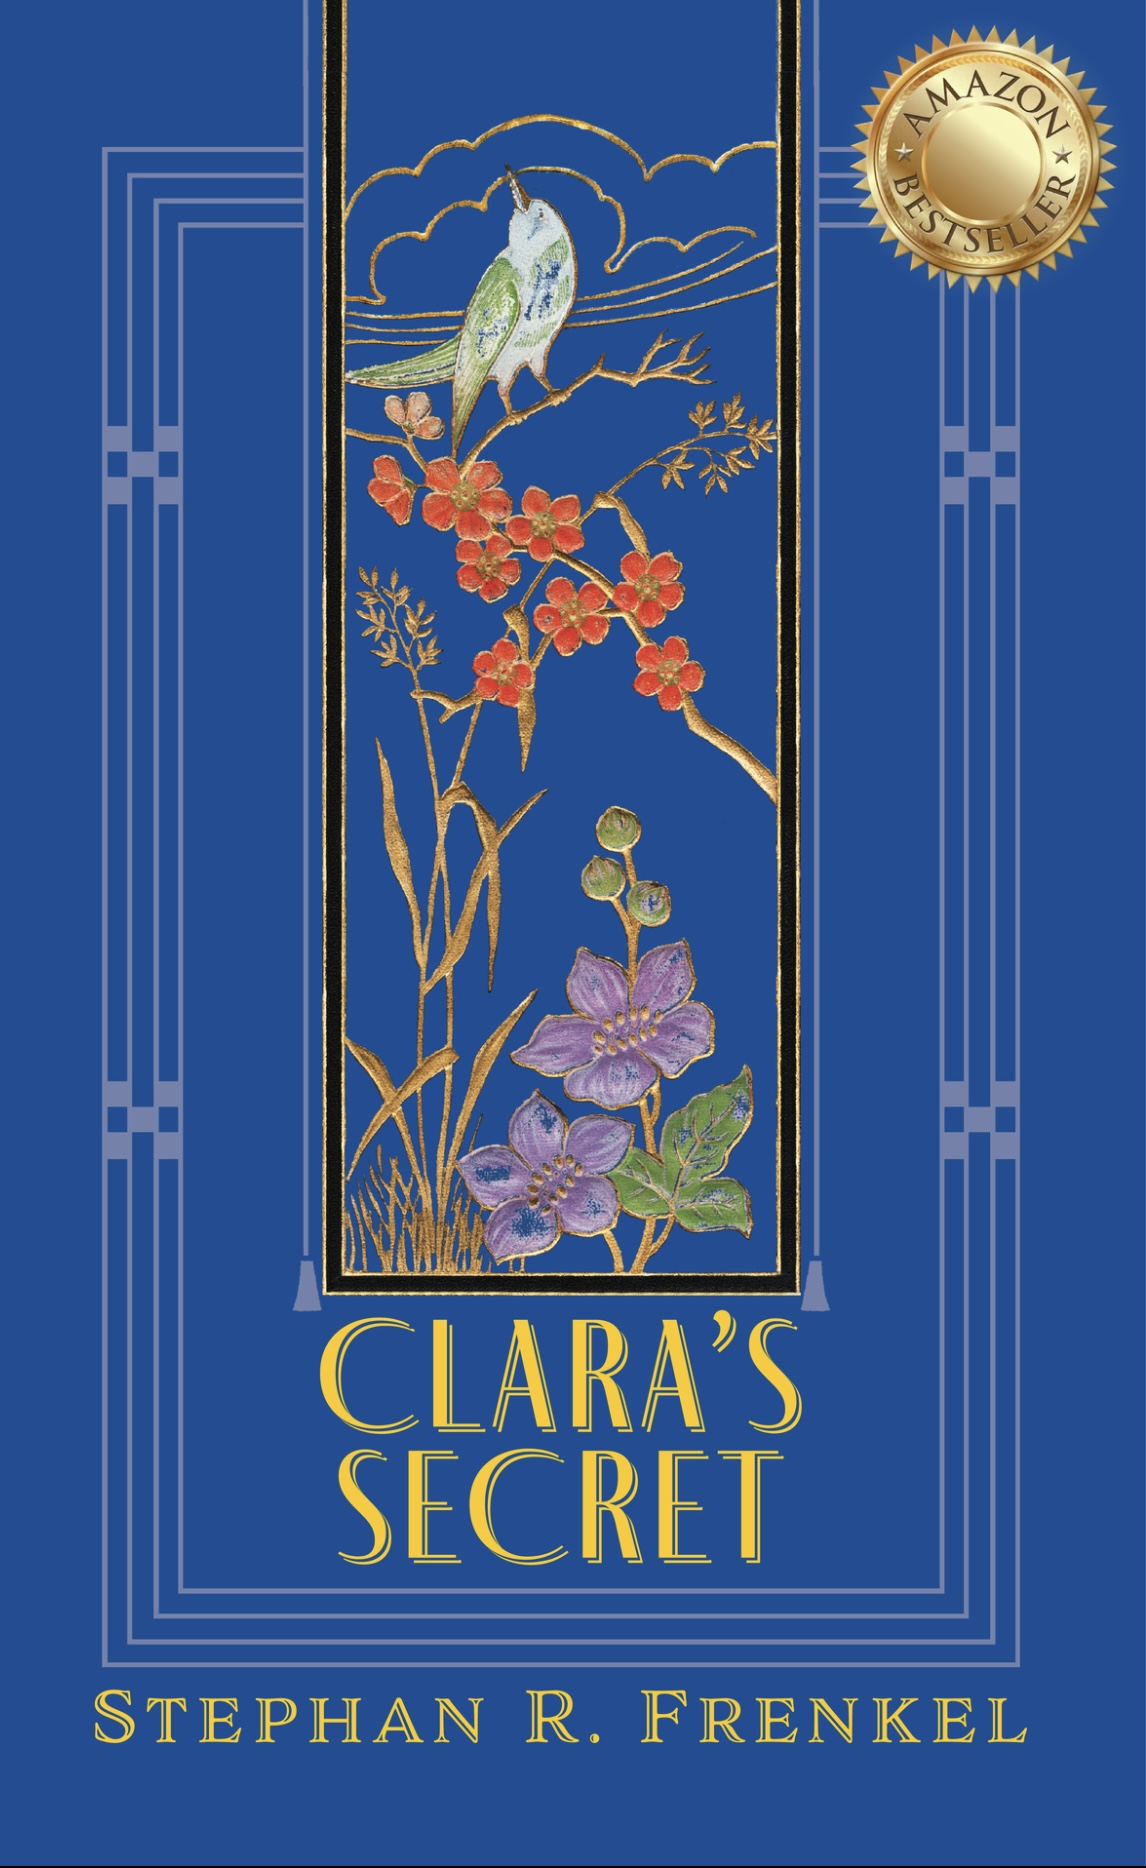 Clara's Secret by Stephan R. Frenkel